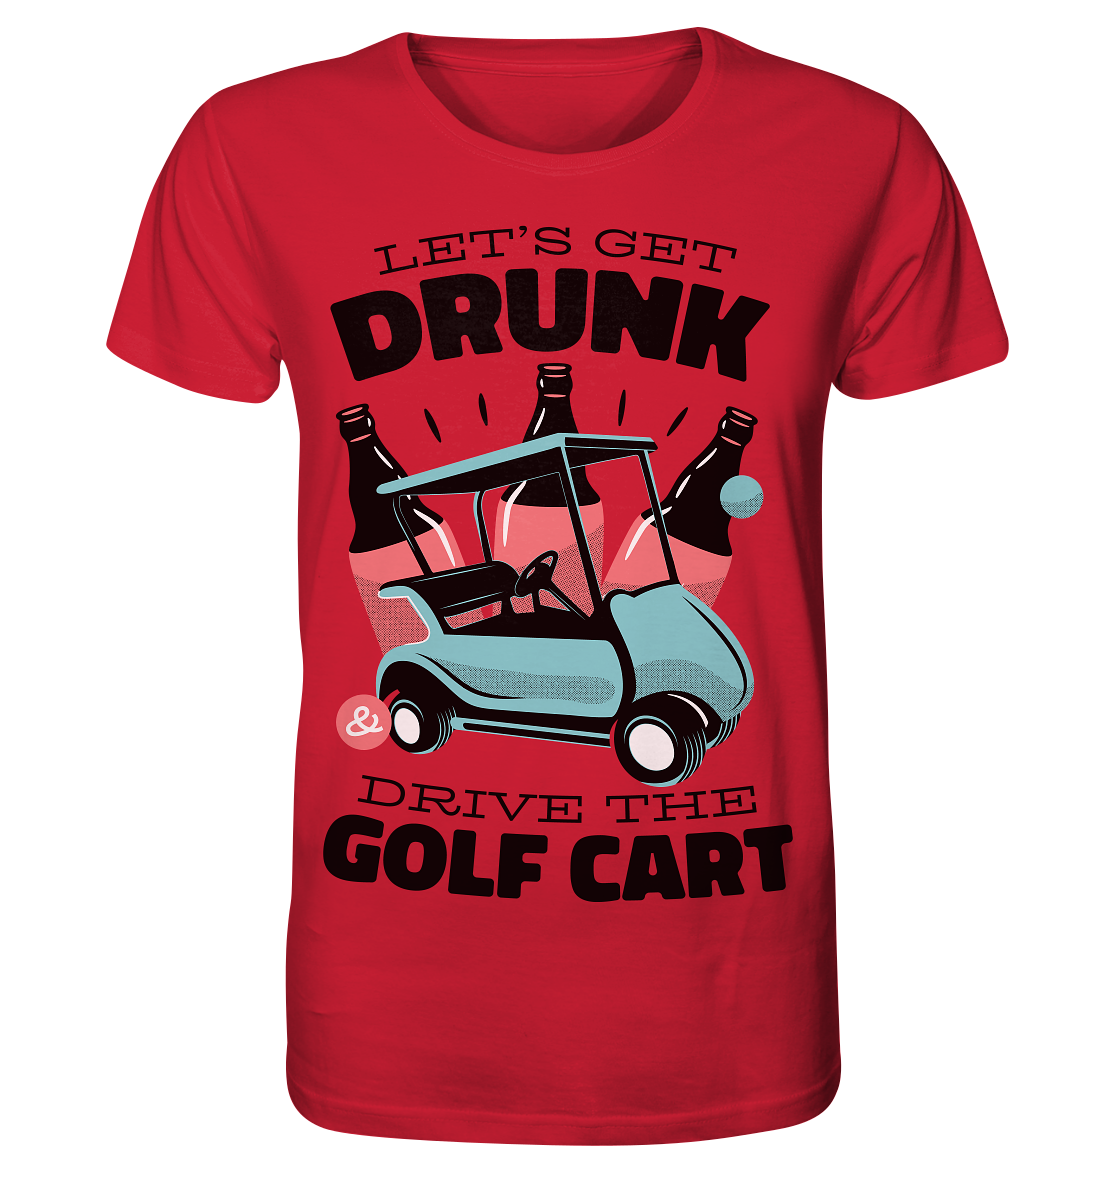 Let's get drunk drive the golf cart, Let's get drunk drive the golf cart - Organic Shirt